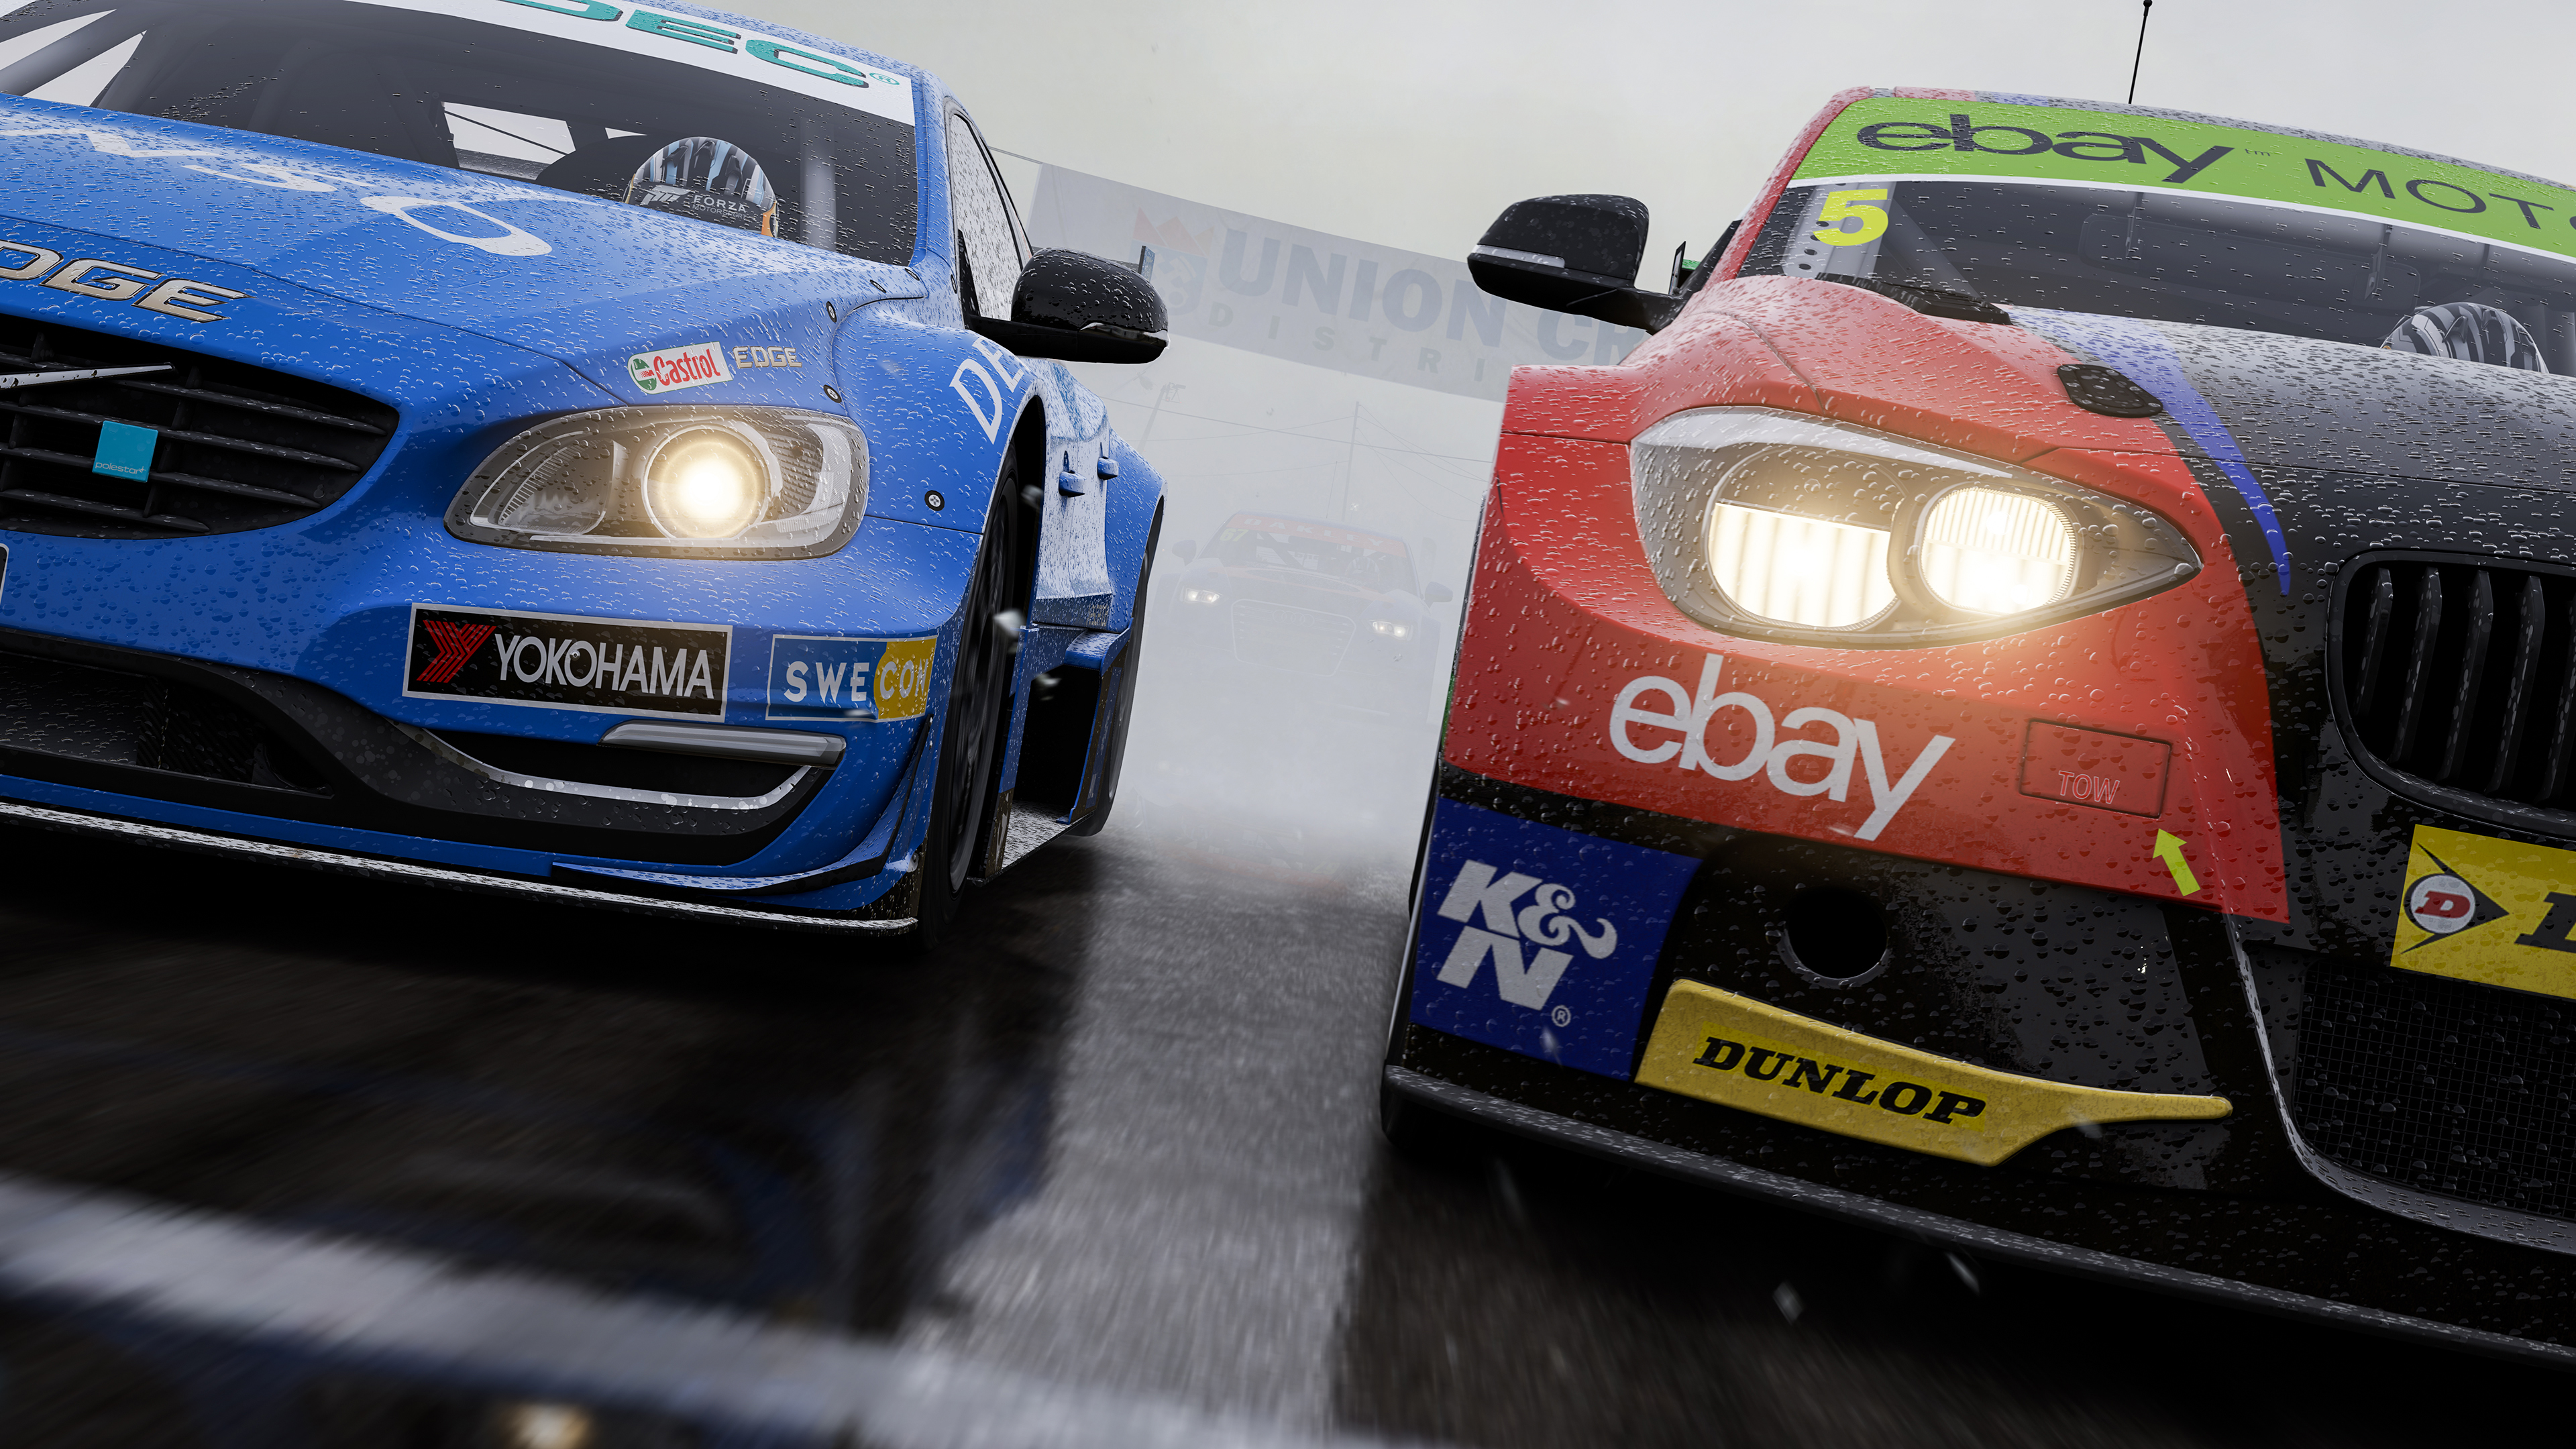 Forza Motorsport HD wallpapers, Desktop wallpaper - most viewed